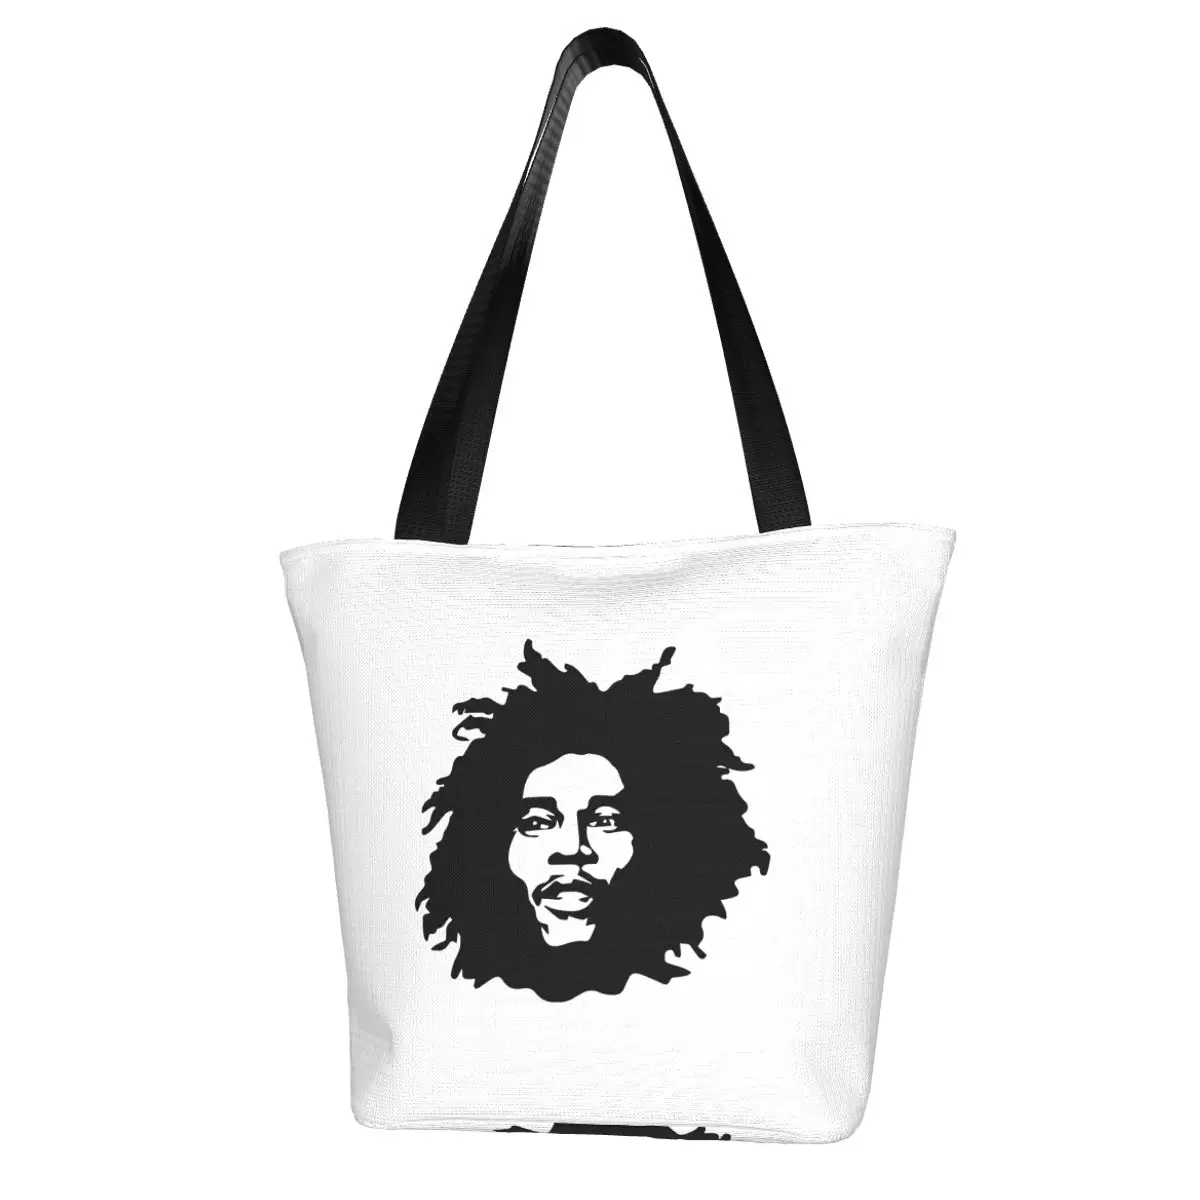 Bob Marley Shopping Bag Aesthetic Cloth Outdoor Handbag Female Fashion Bags